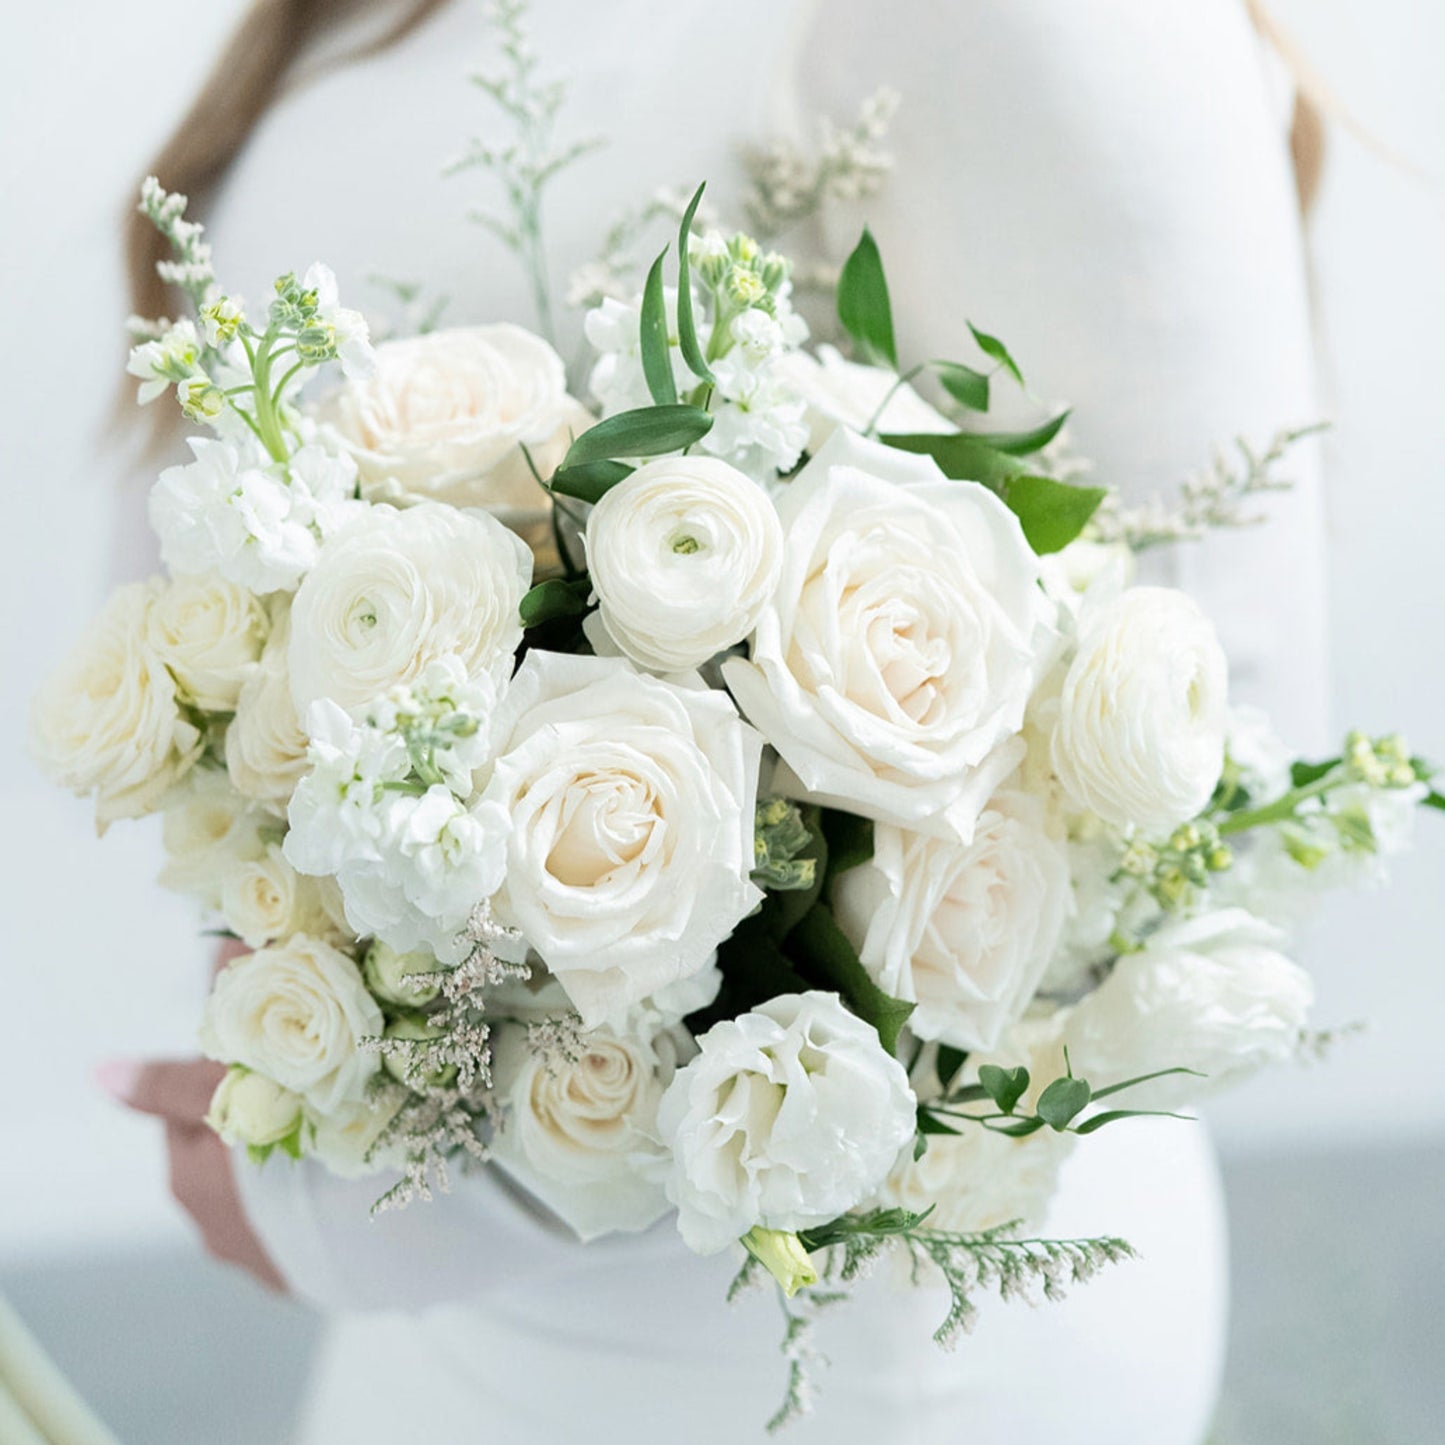 The Sophia Classic Whites Bridal Bouquet